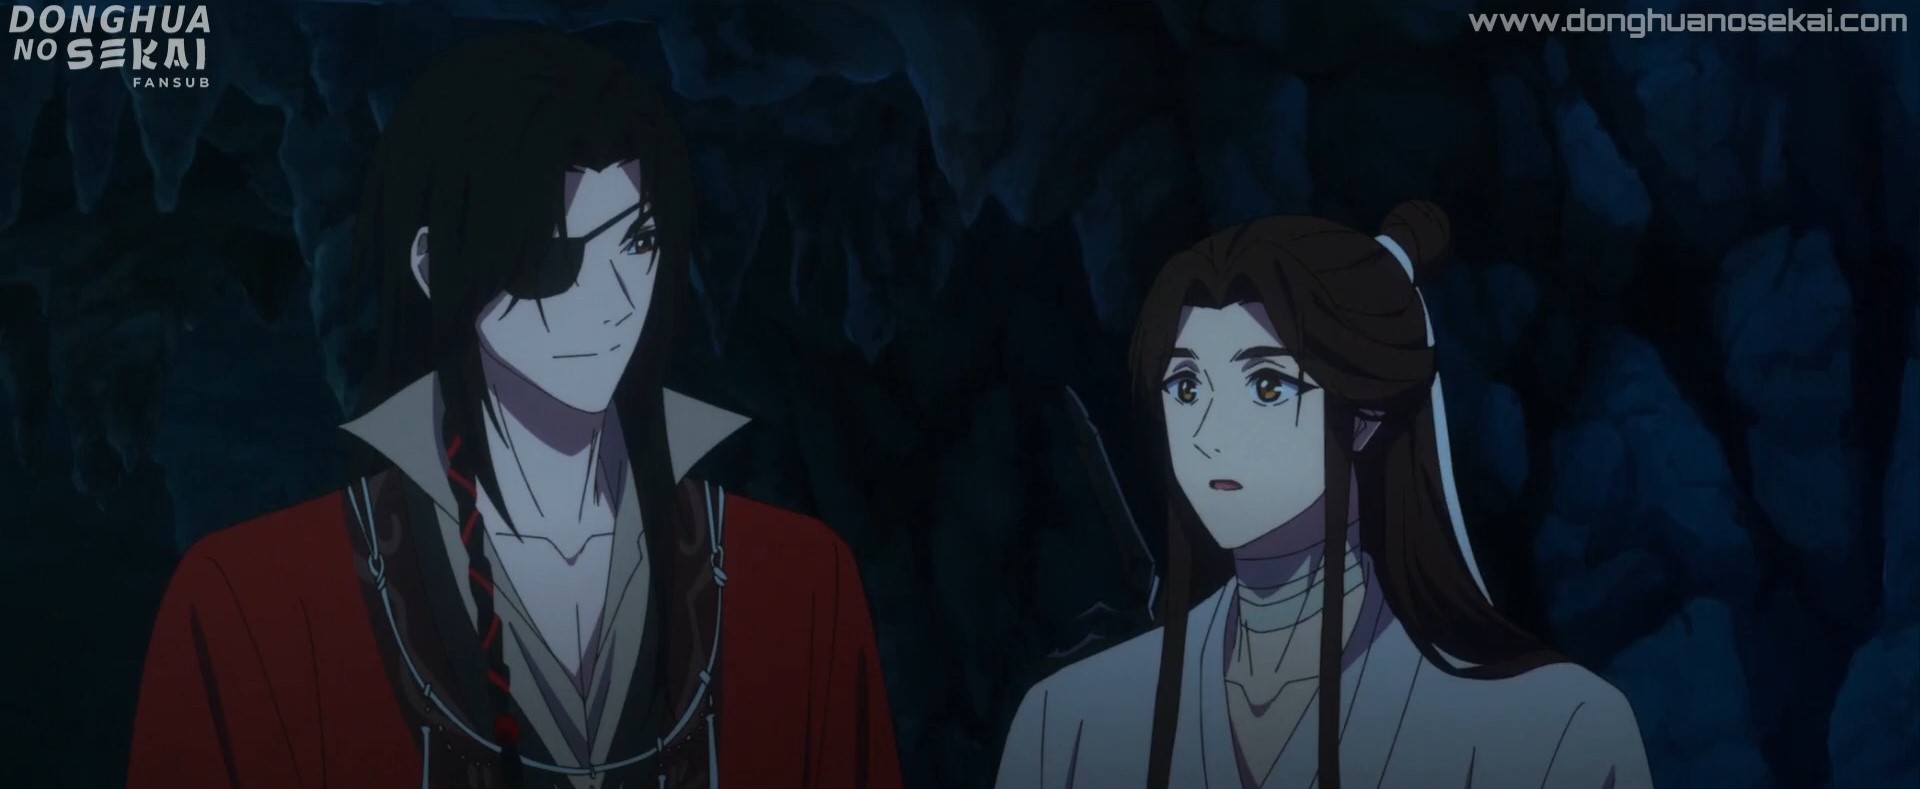 Assistir Quanzhi Gaoshou 2 (The King's Avatar 2) Episódio 4 » Anime TV  Online